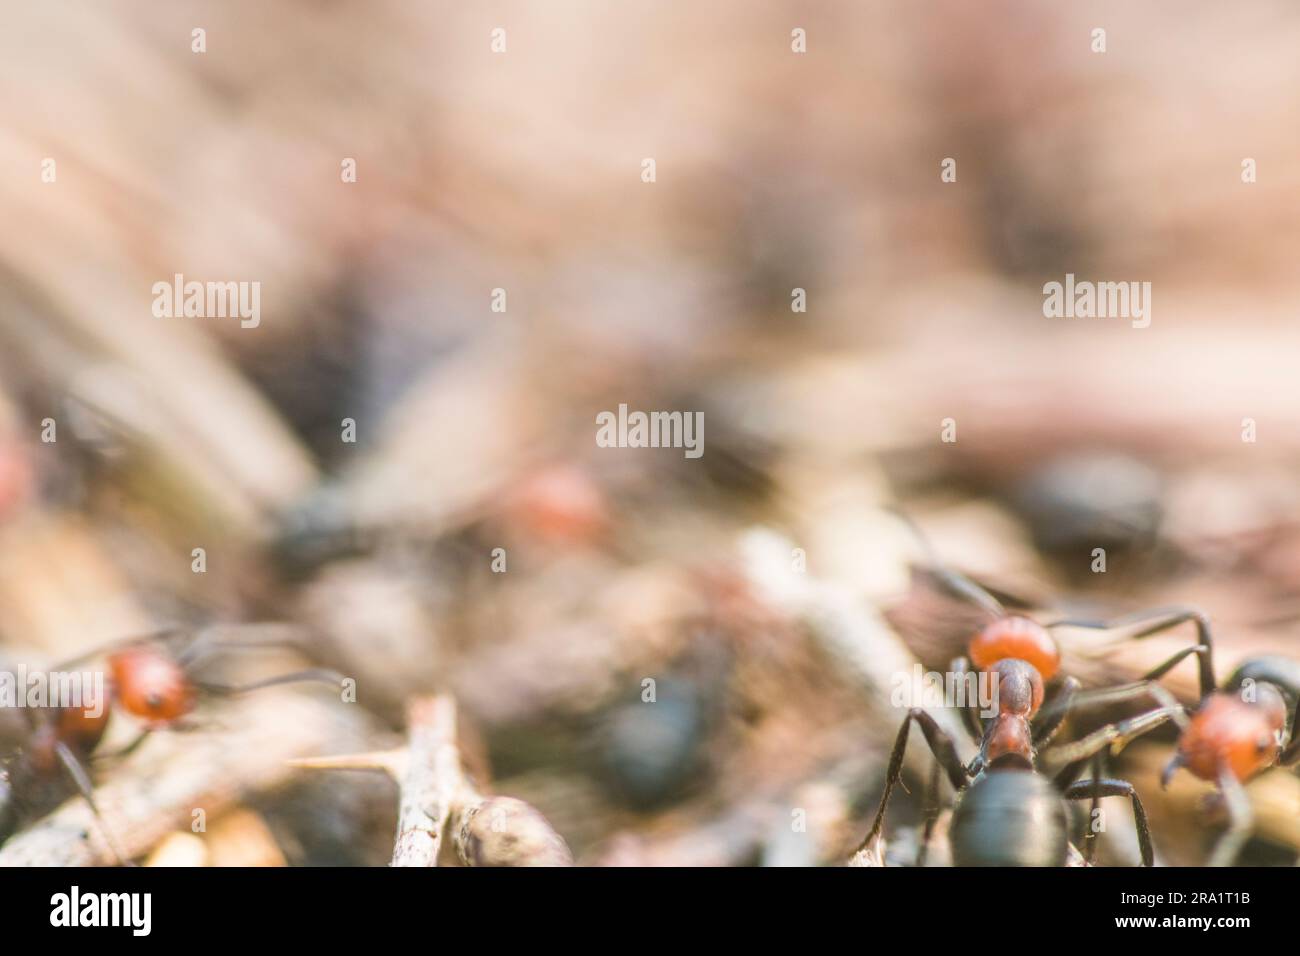 Close-up of carpenter ants Stock Photo